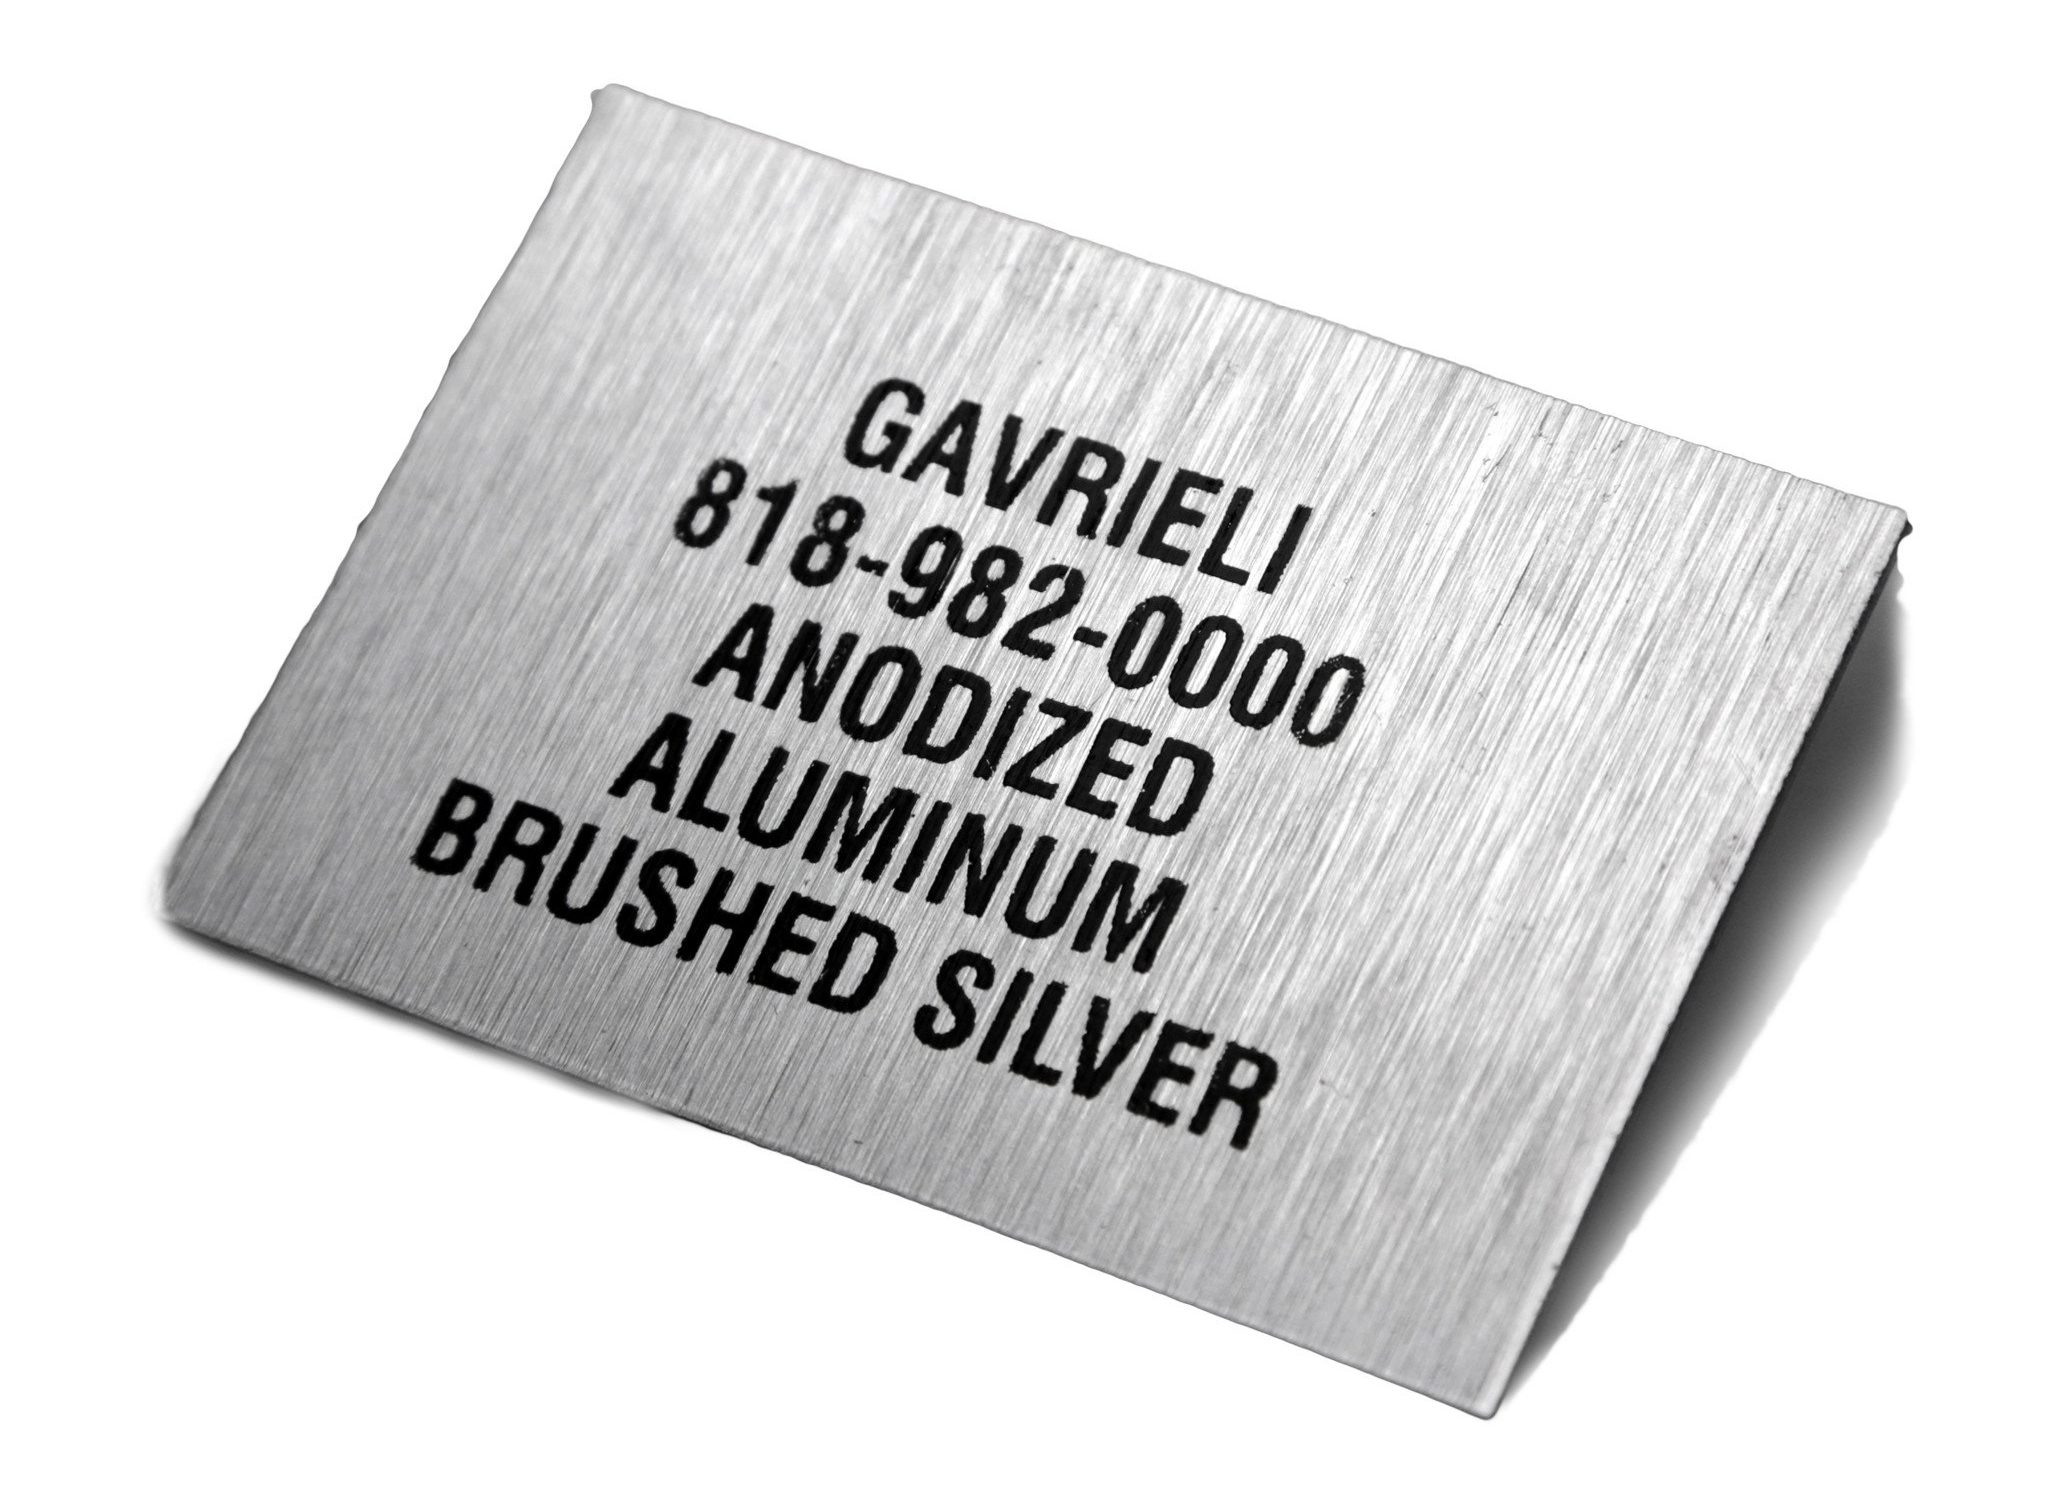 Anodized Aluminum Brushed Silver